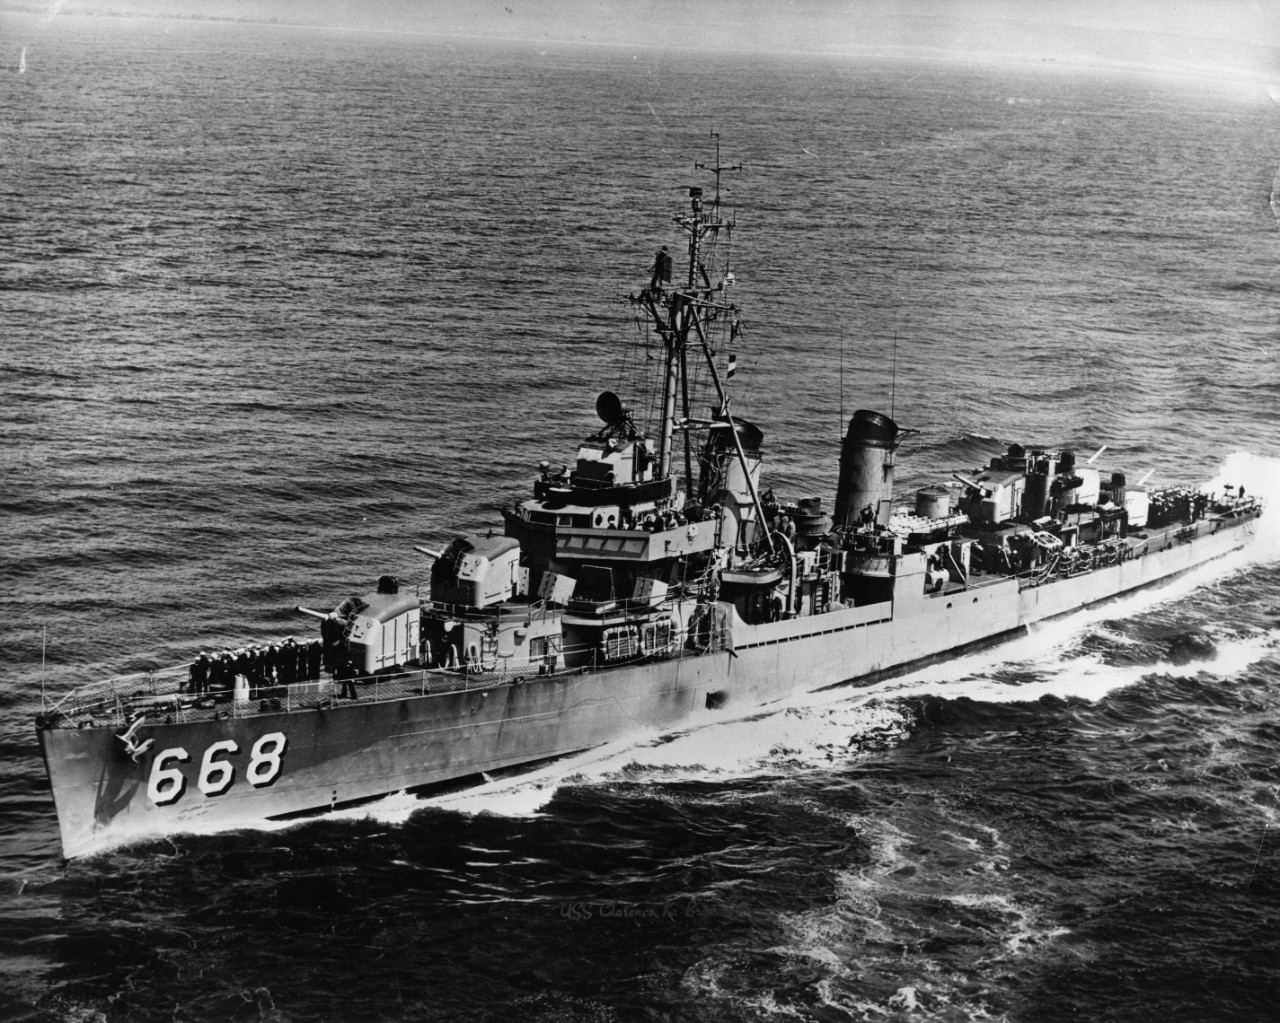 USS Clarence K. Bronson (DD-668)